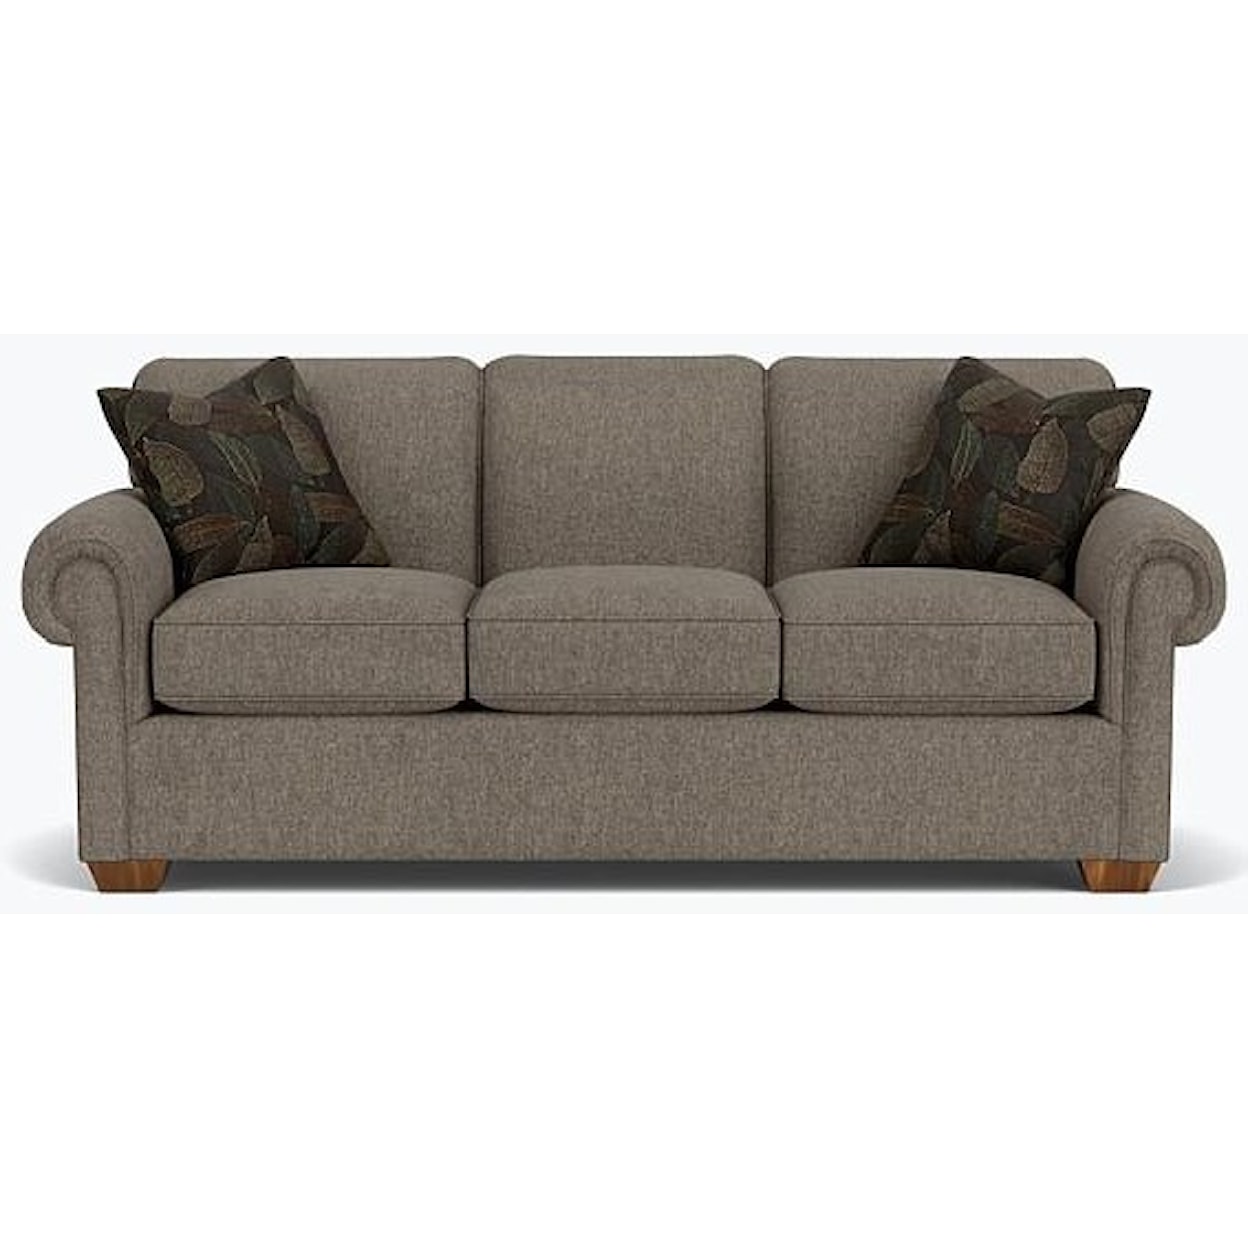 Flexsteel Trailridge Sofa